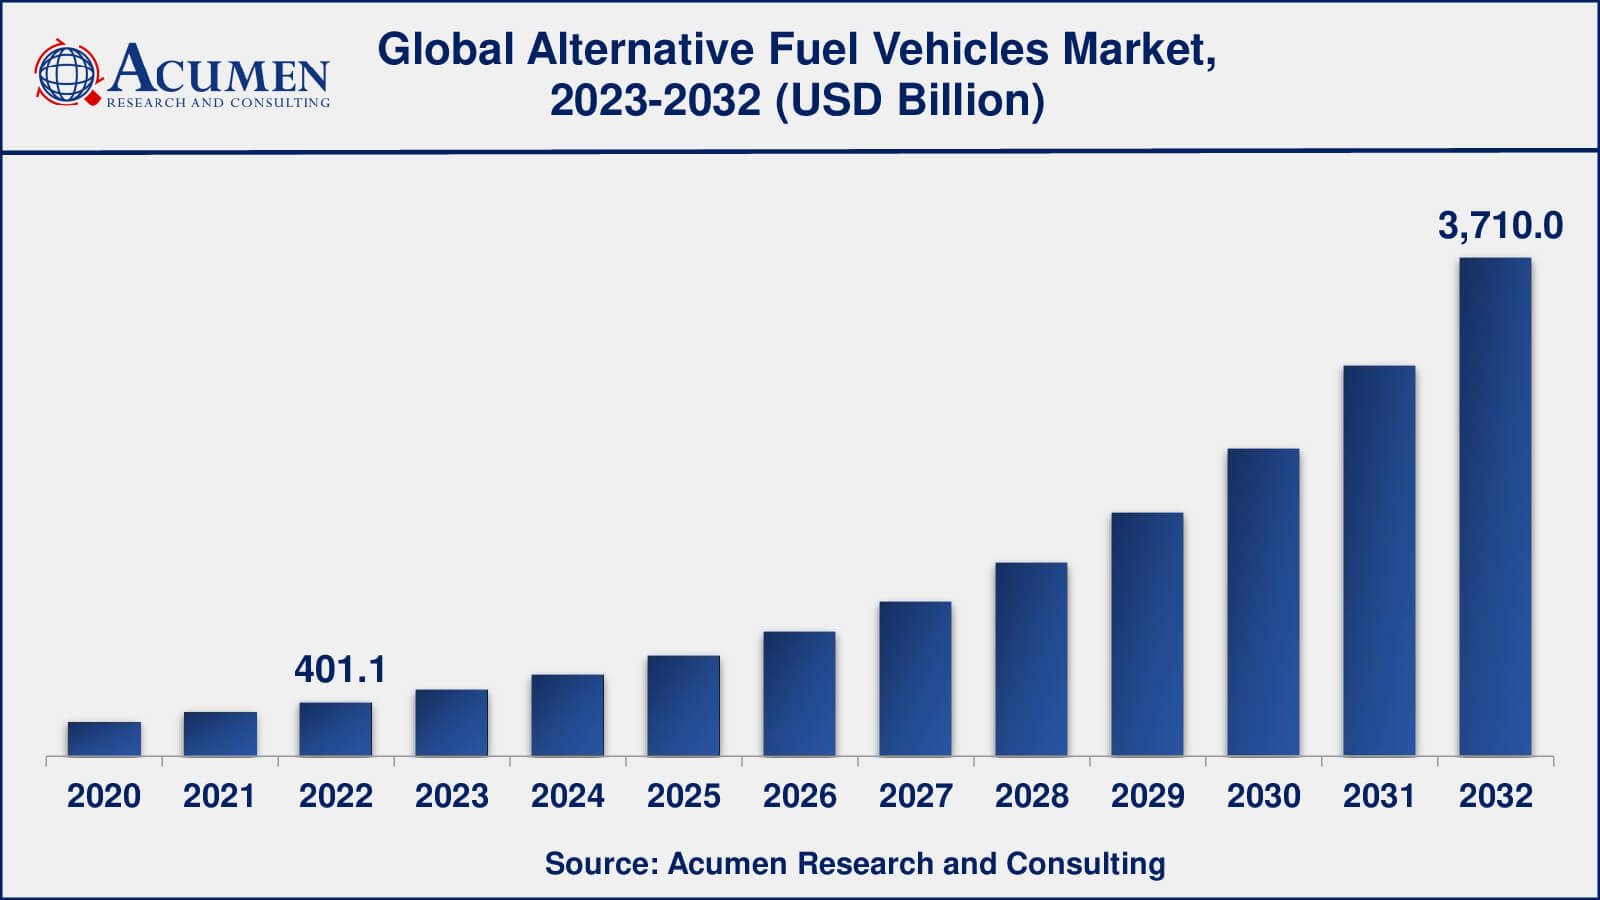 Global Alternative Fuel Vehicles Market Dynamics